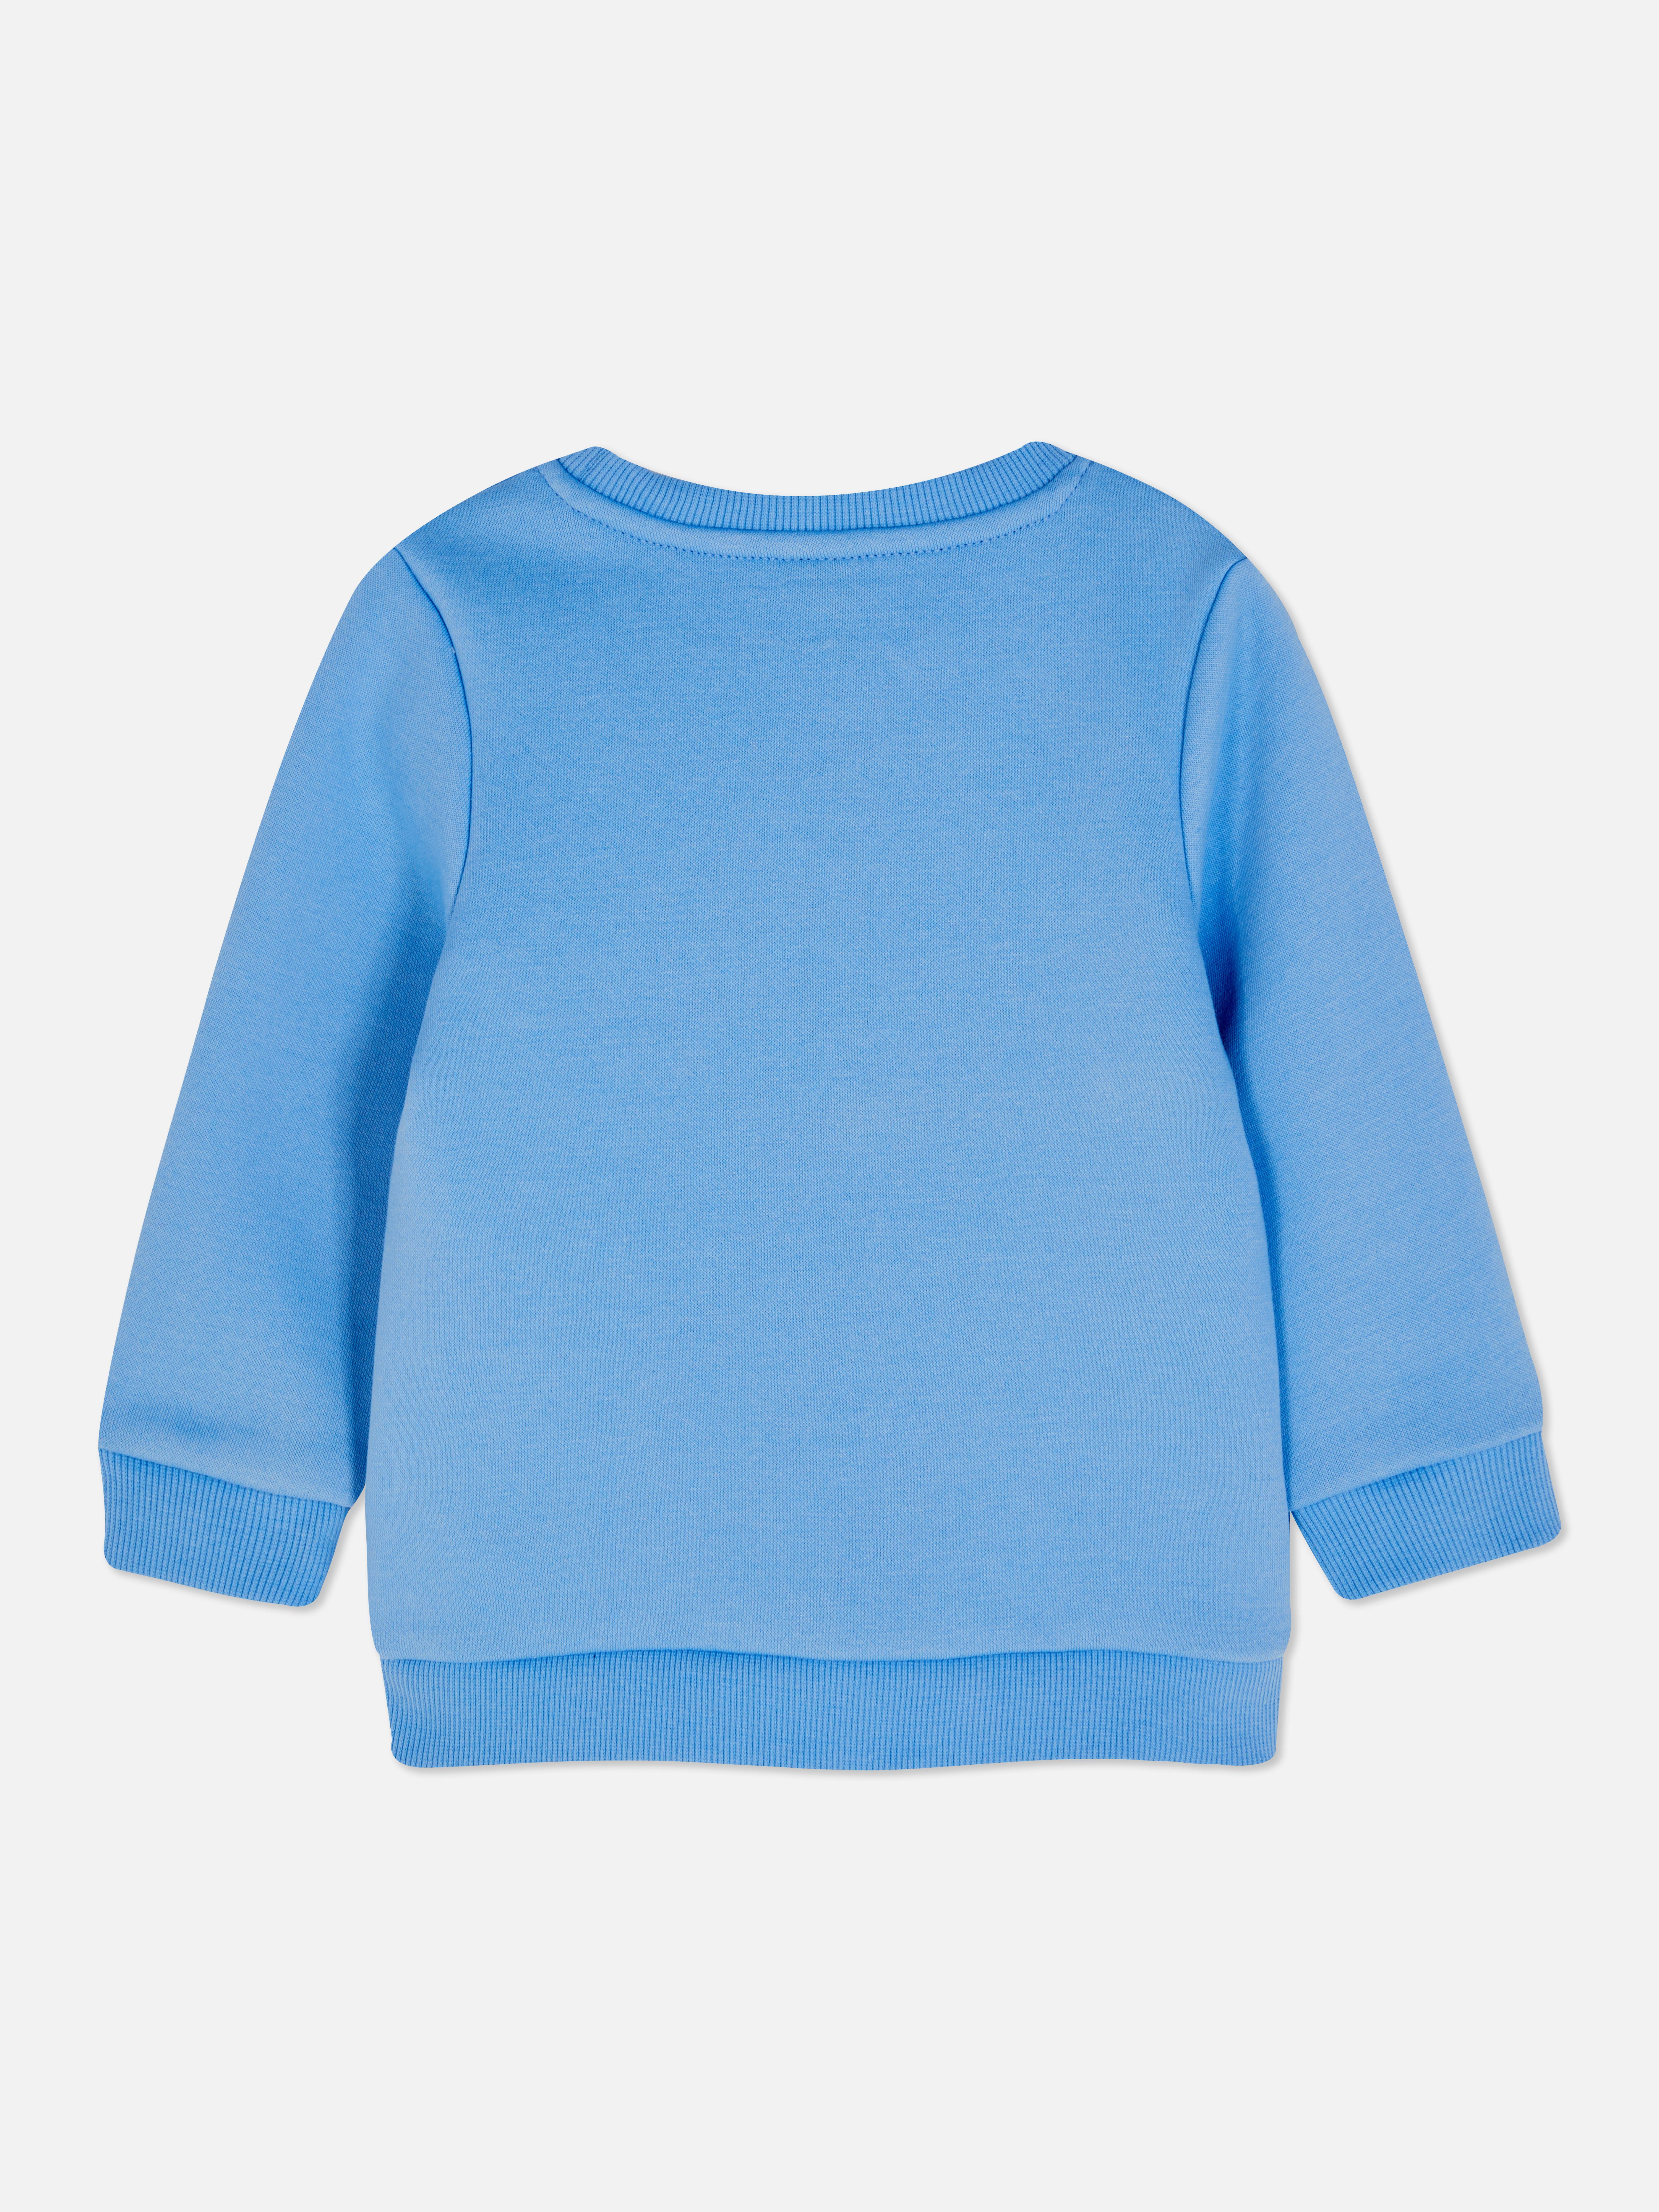 Disney’s Lilo & Stitch Printed Sweatshirt